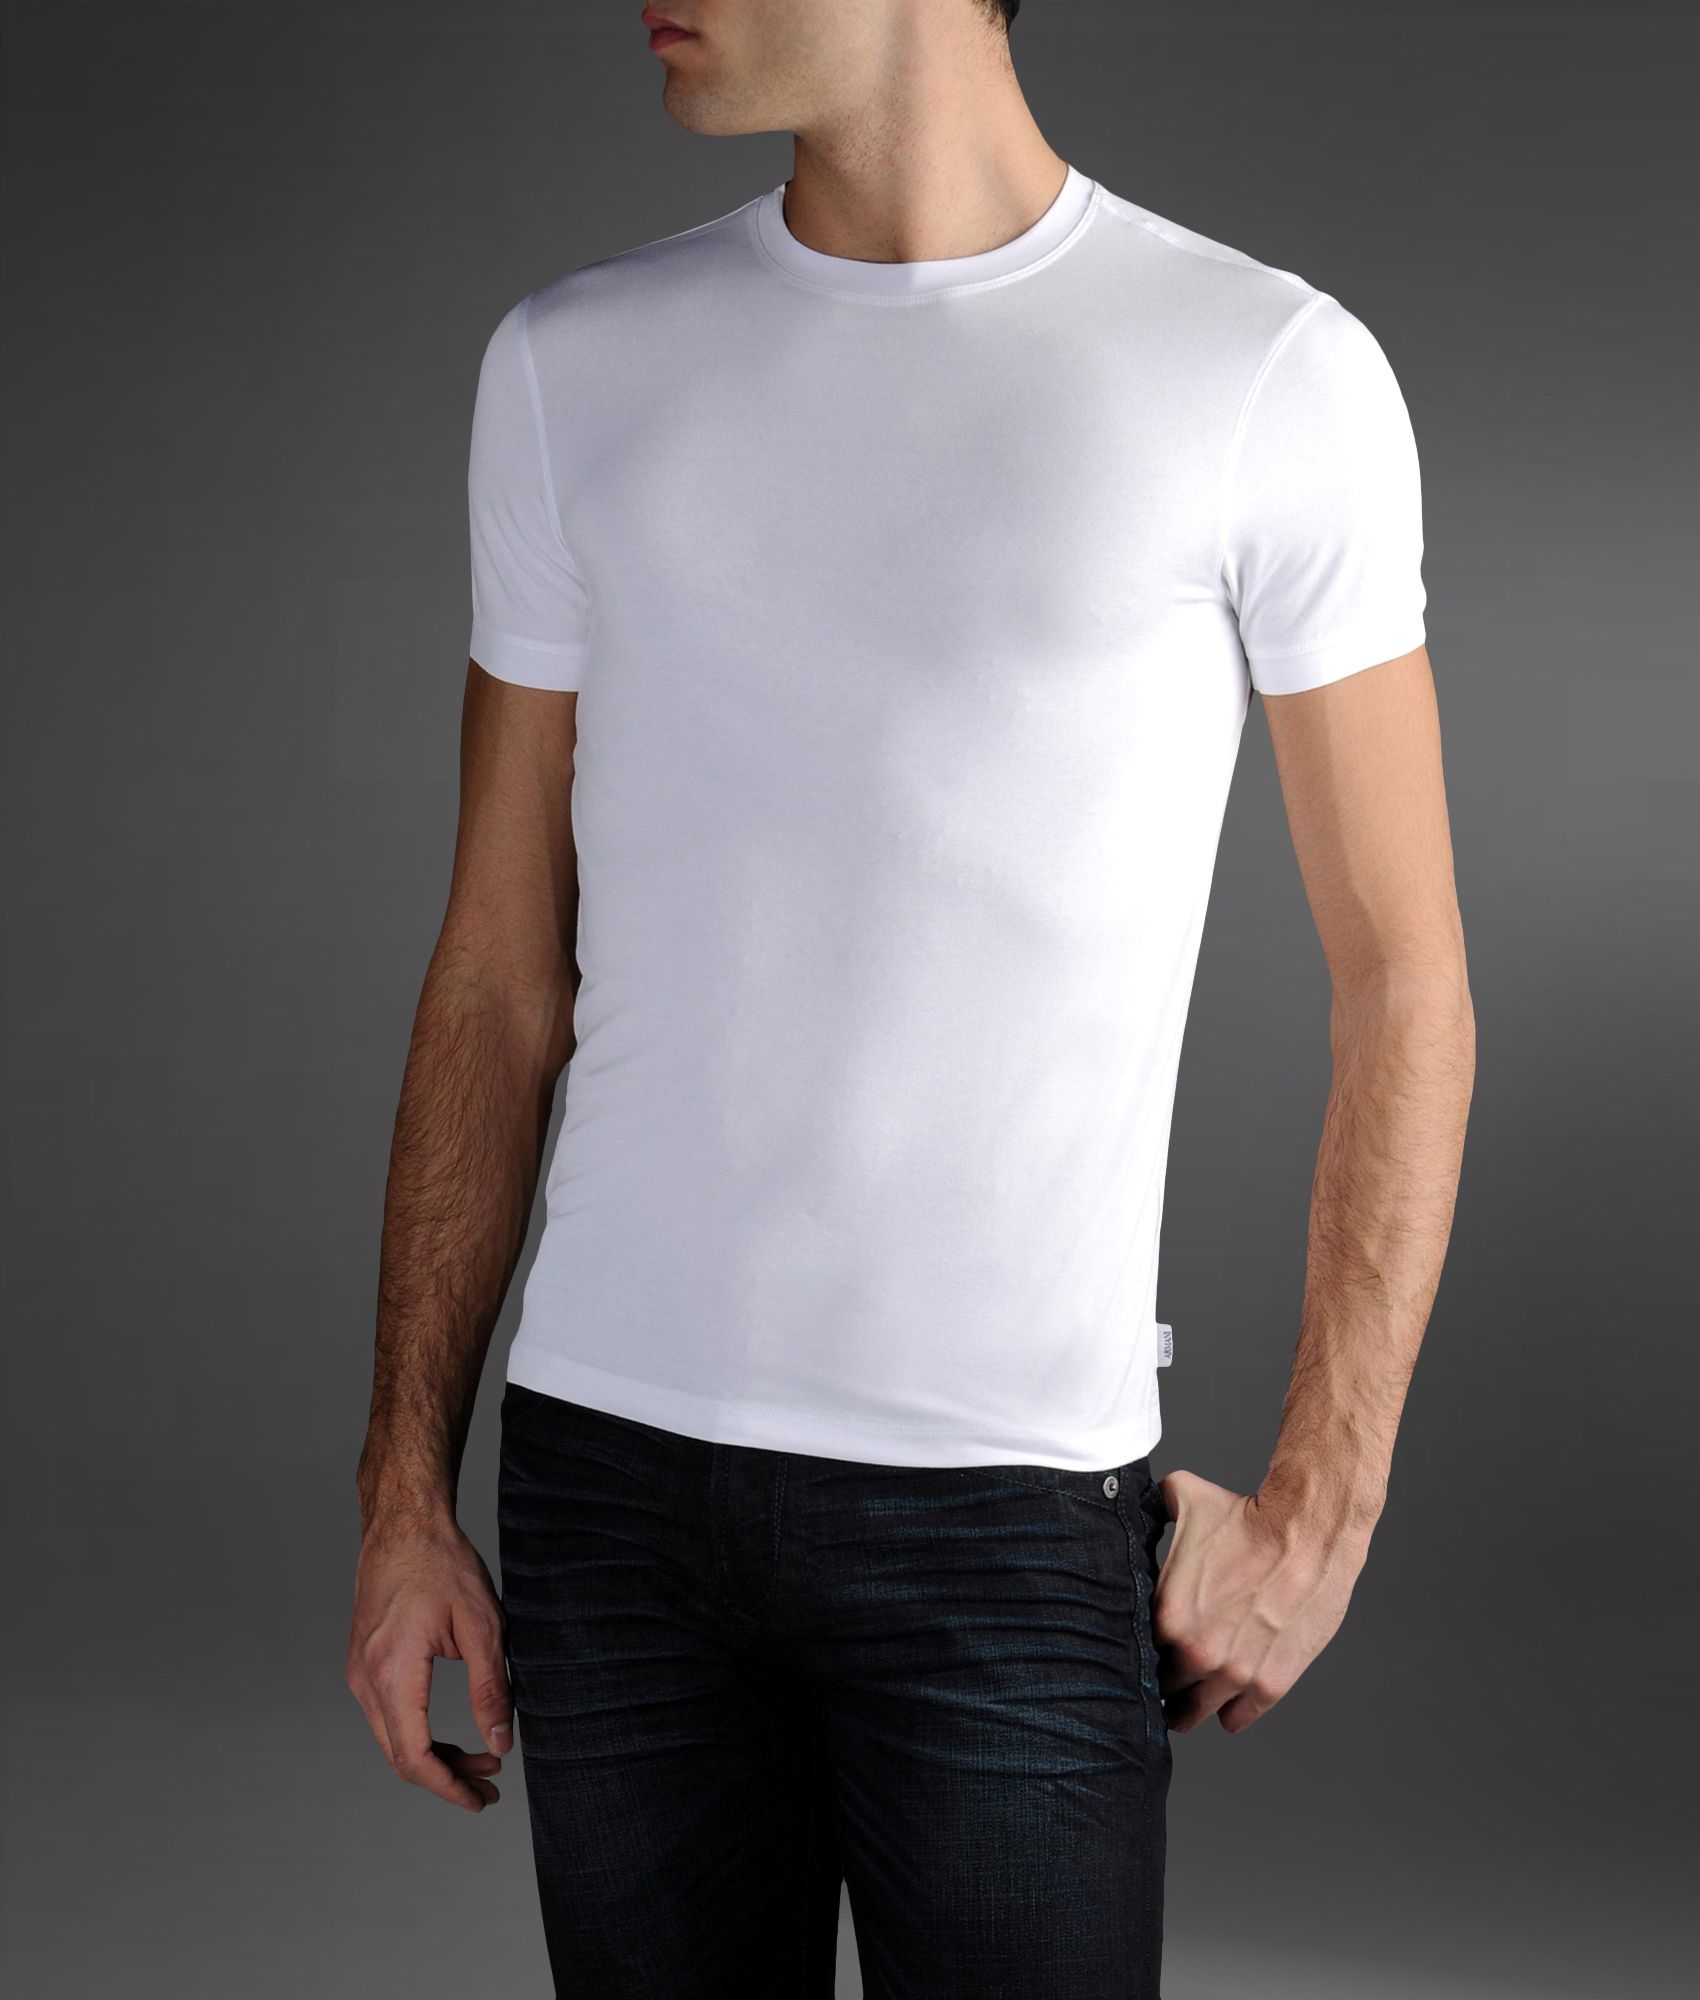 Armani T Shirt In Shorn Stretch Viscose Fabric In White For Men Lyst,White Sweet Potato Vs Orange Sweet Potato